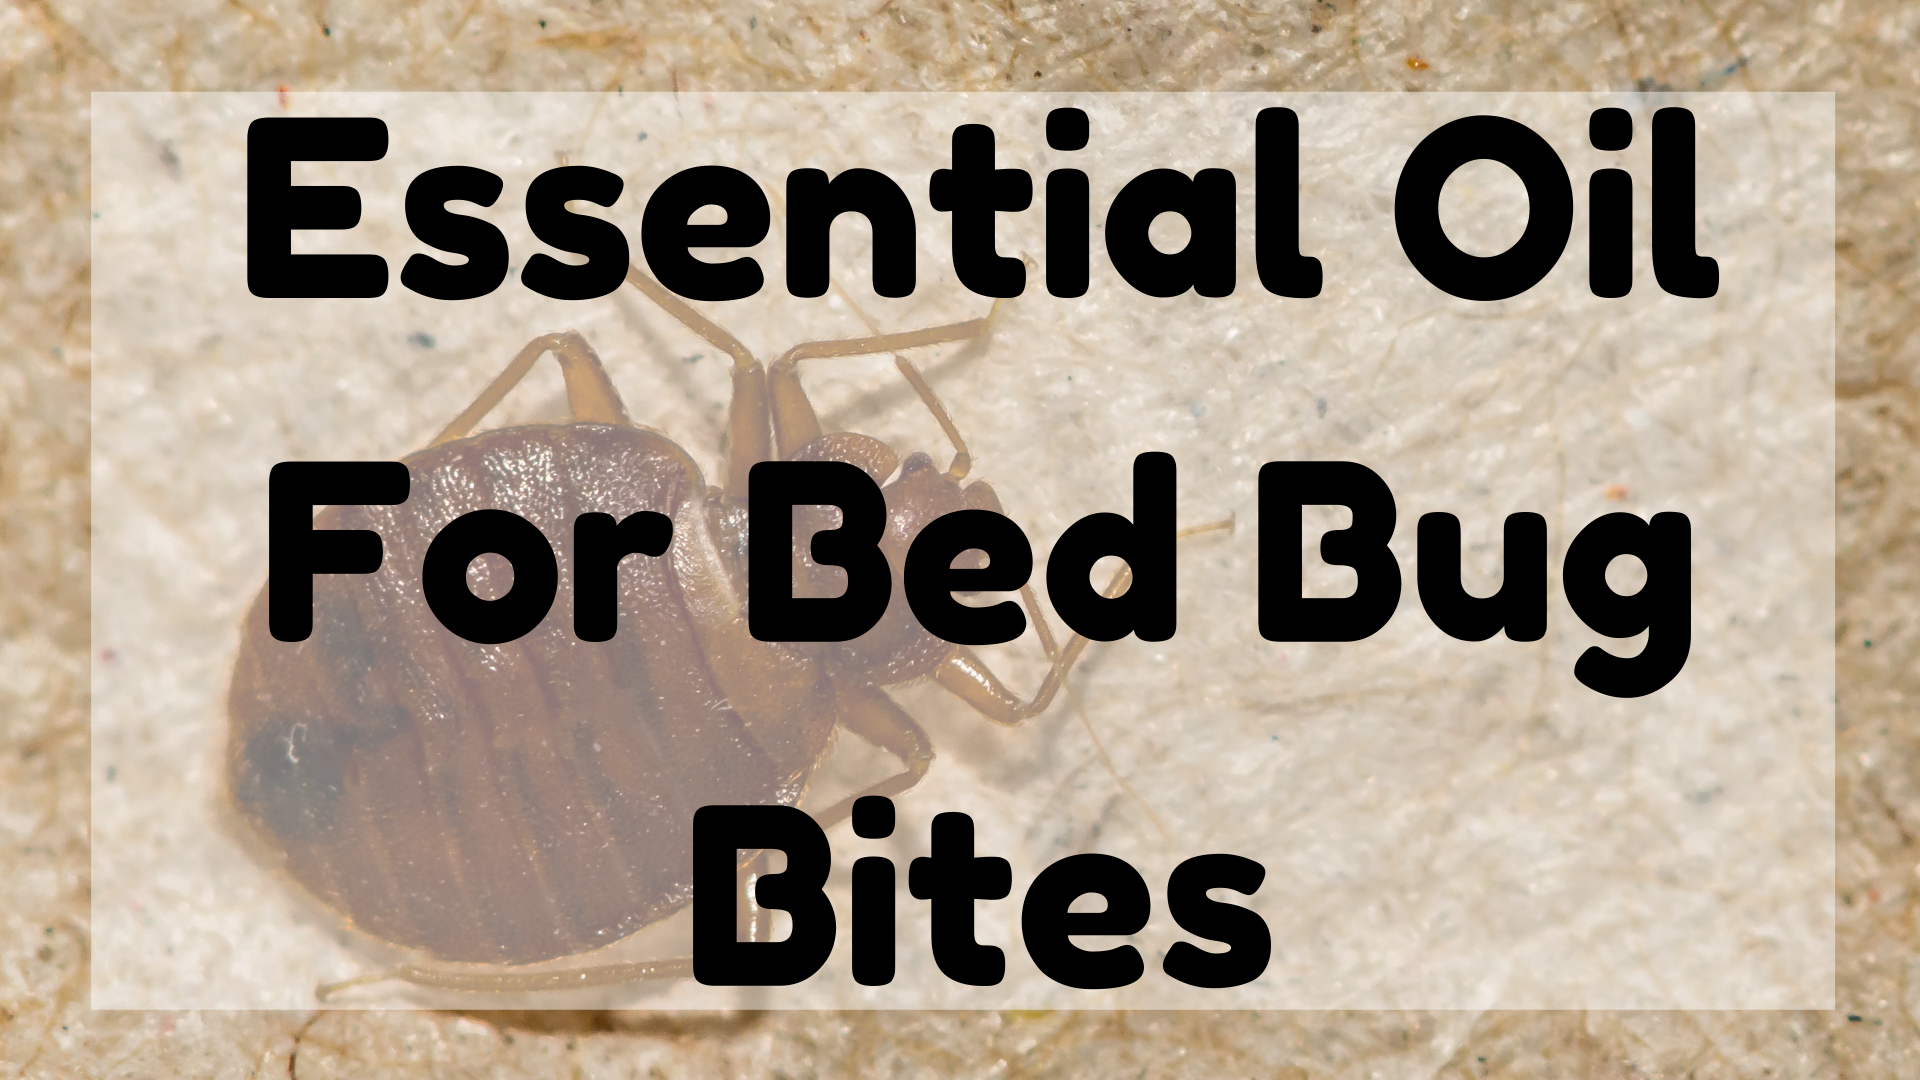 Essential Oil For Bed Bug Bites